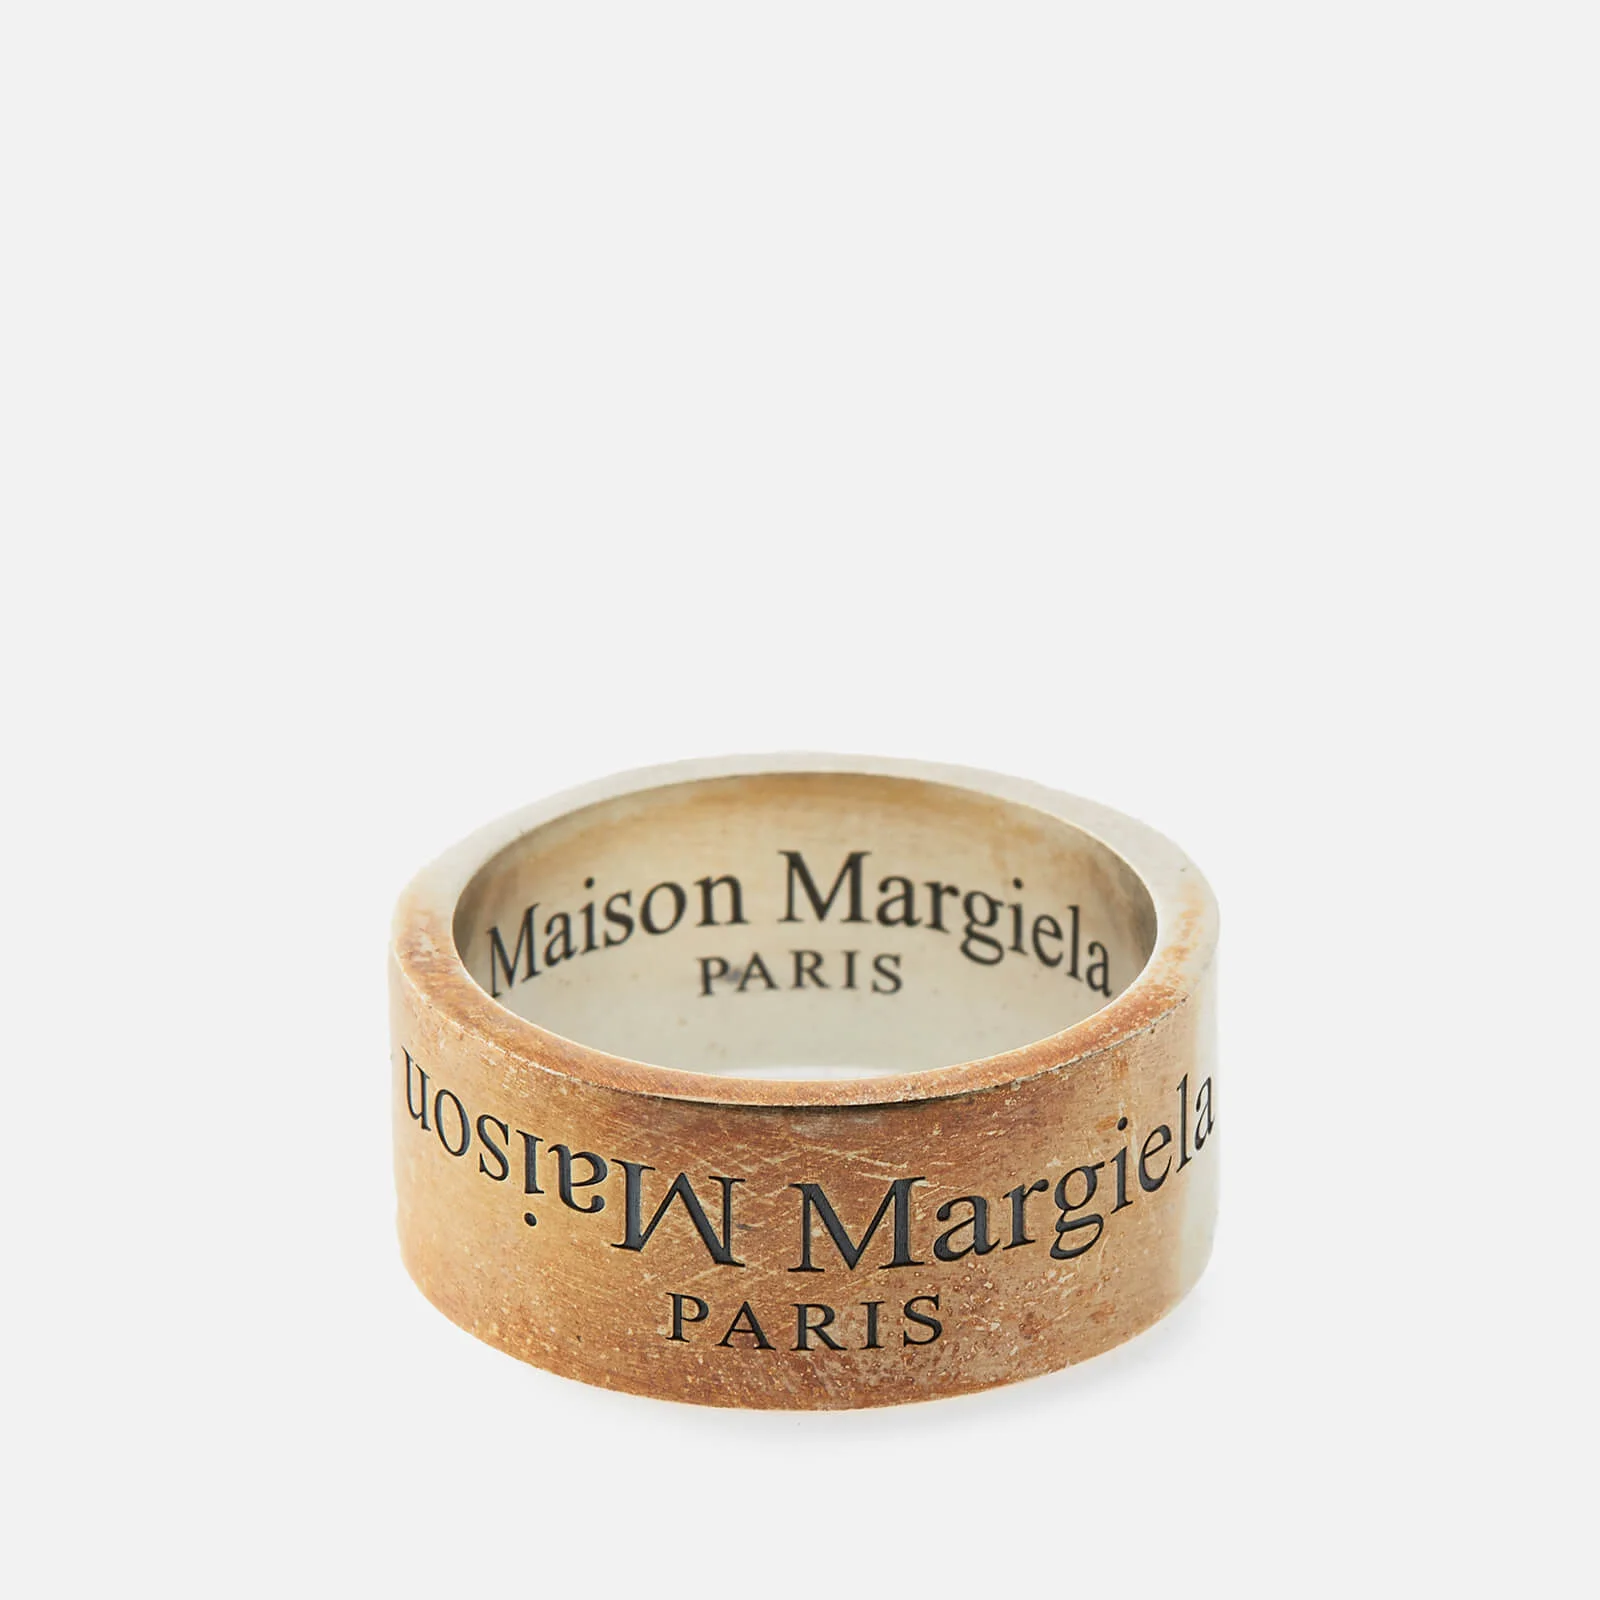 Maison Margiela Men's Branded Ring - Brunito Image 1